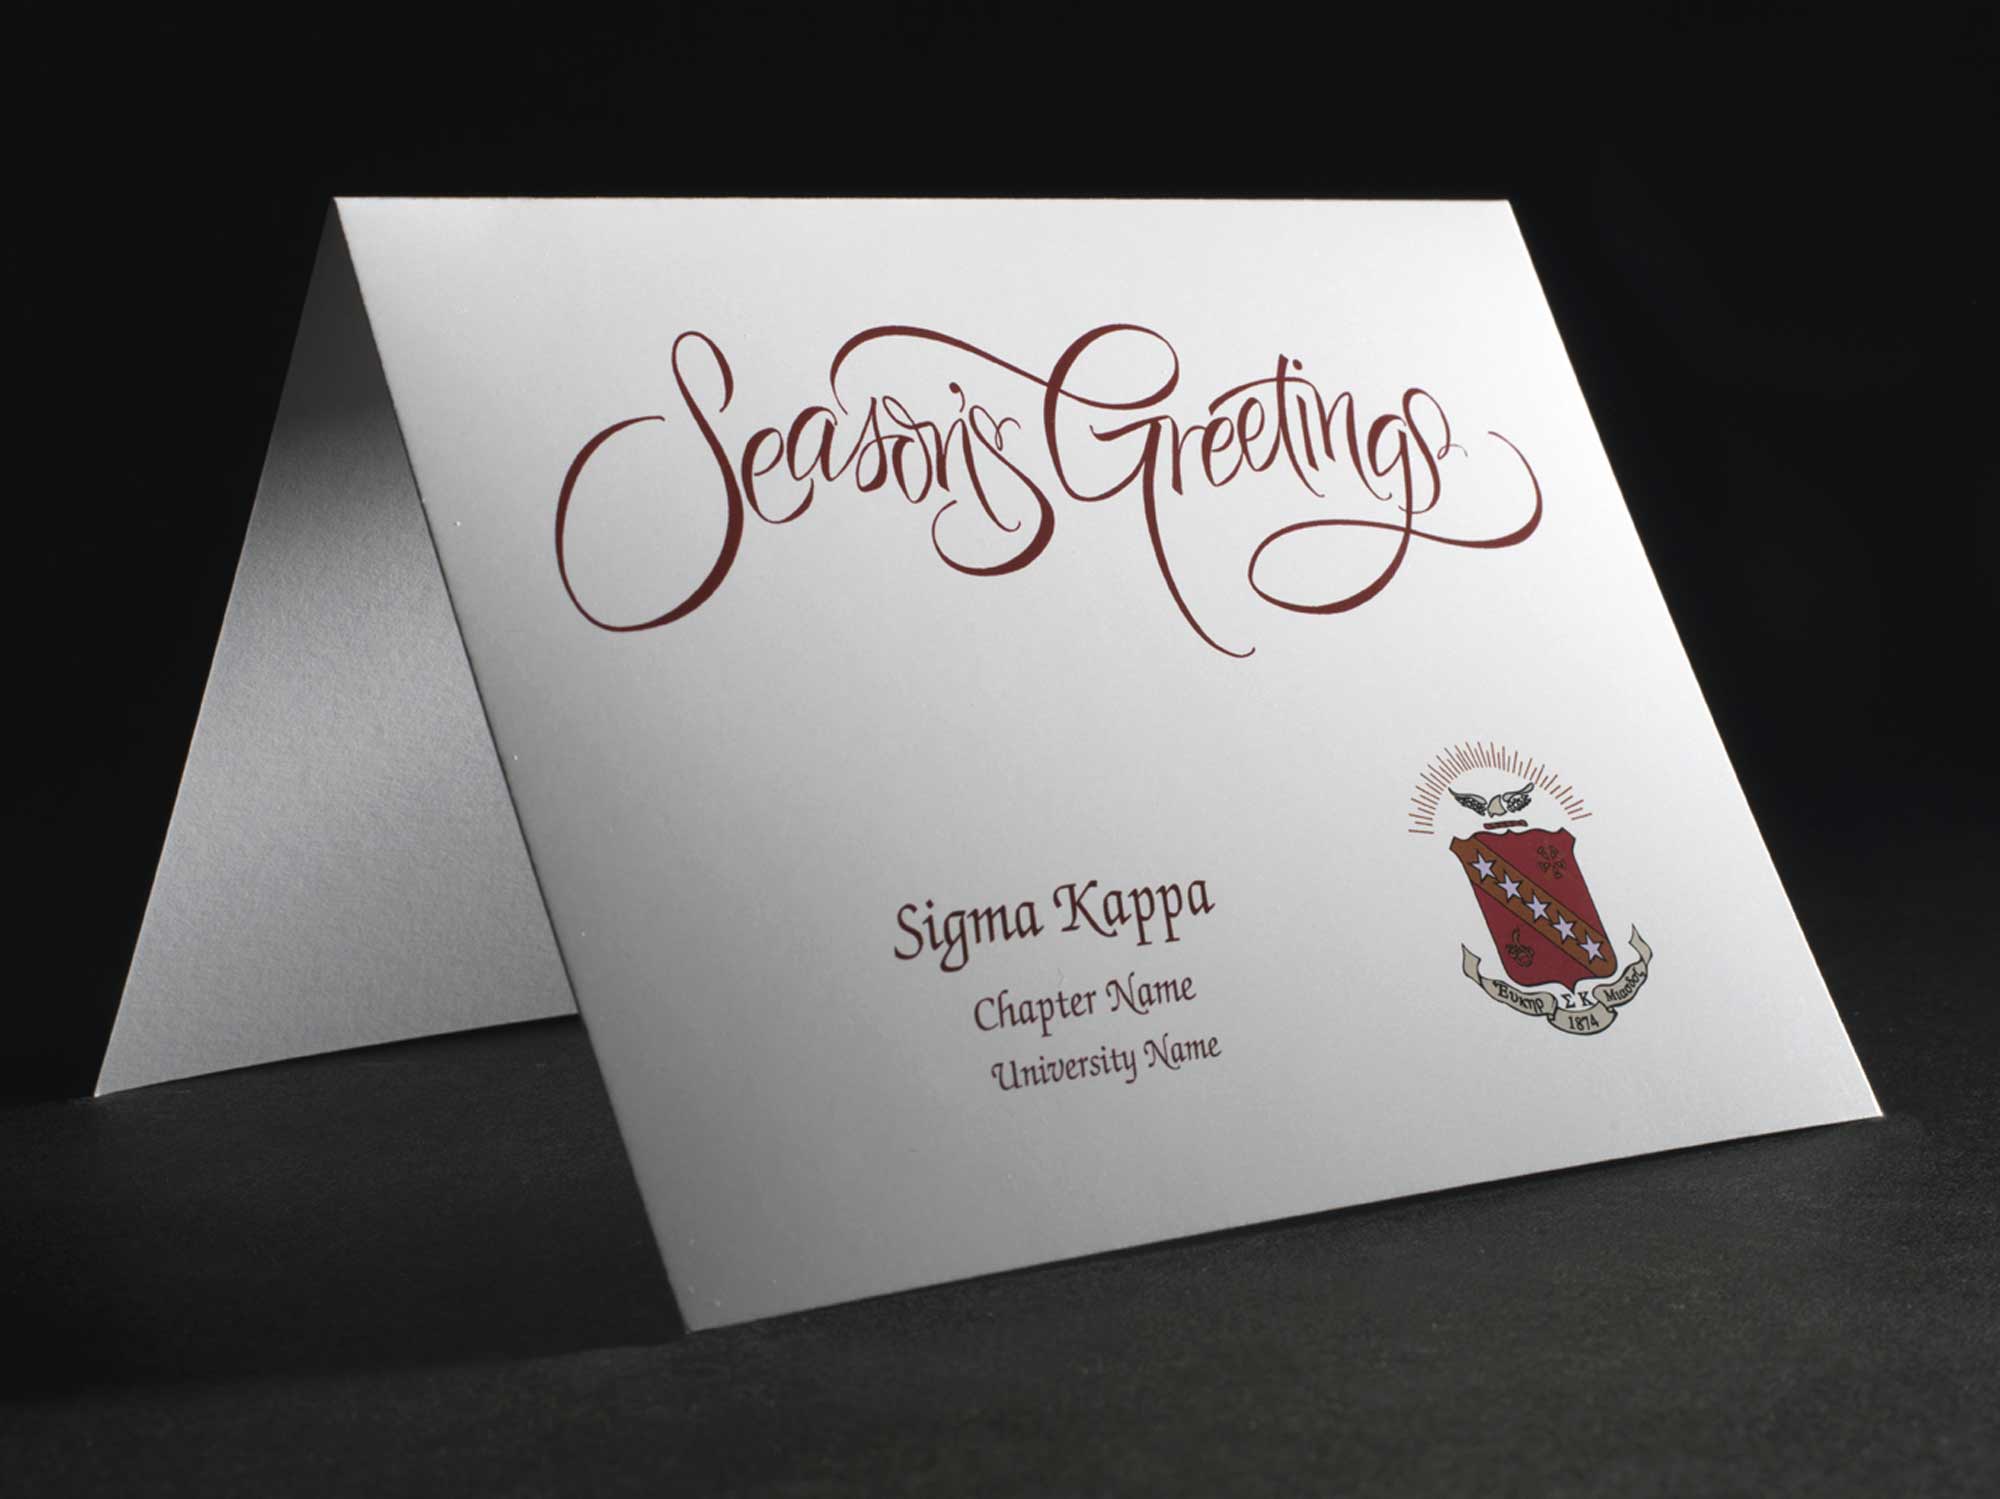 Seasons Greetings Cards Sigma Kappa